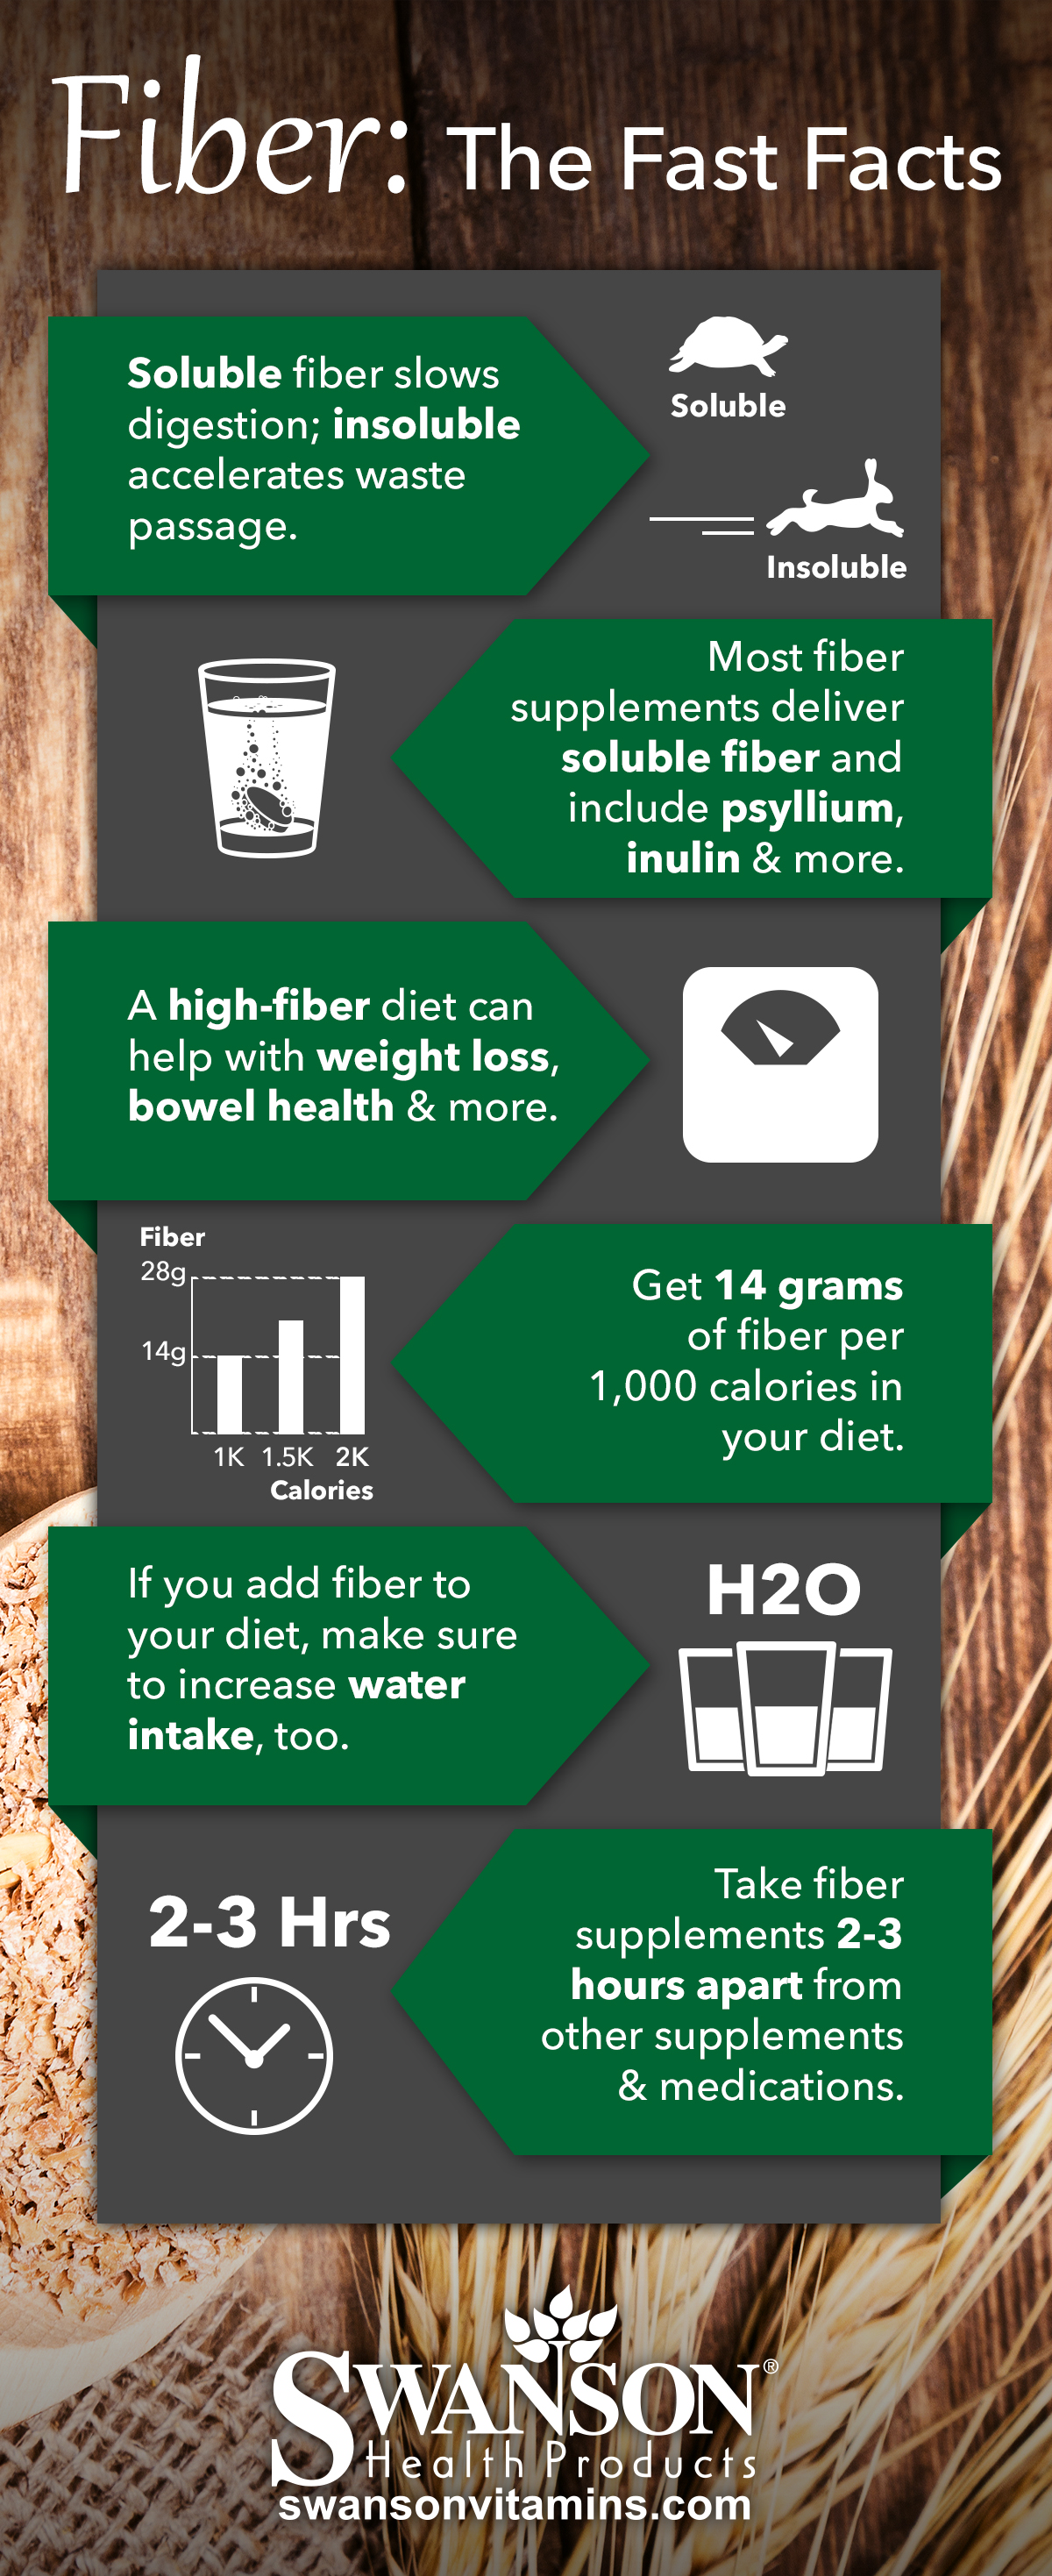 Fiber Supplement Infographic: Nutrition, Dosage and Benefits